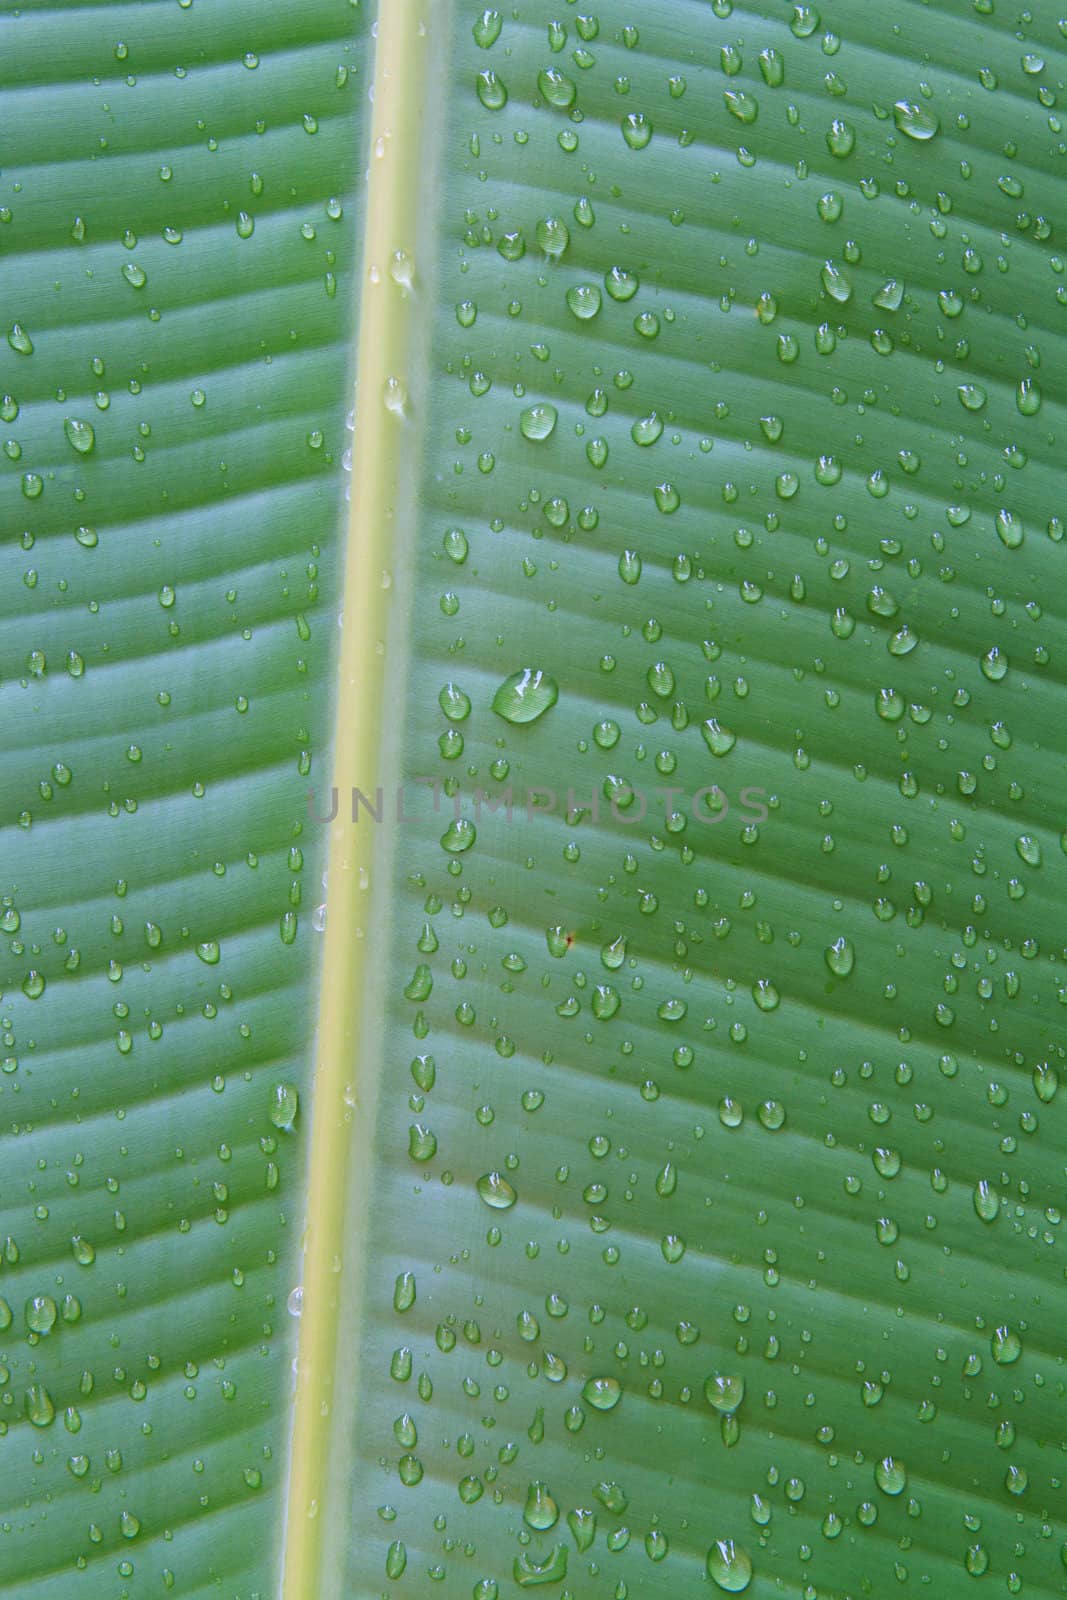 banana leaf close up  by thanomphong